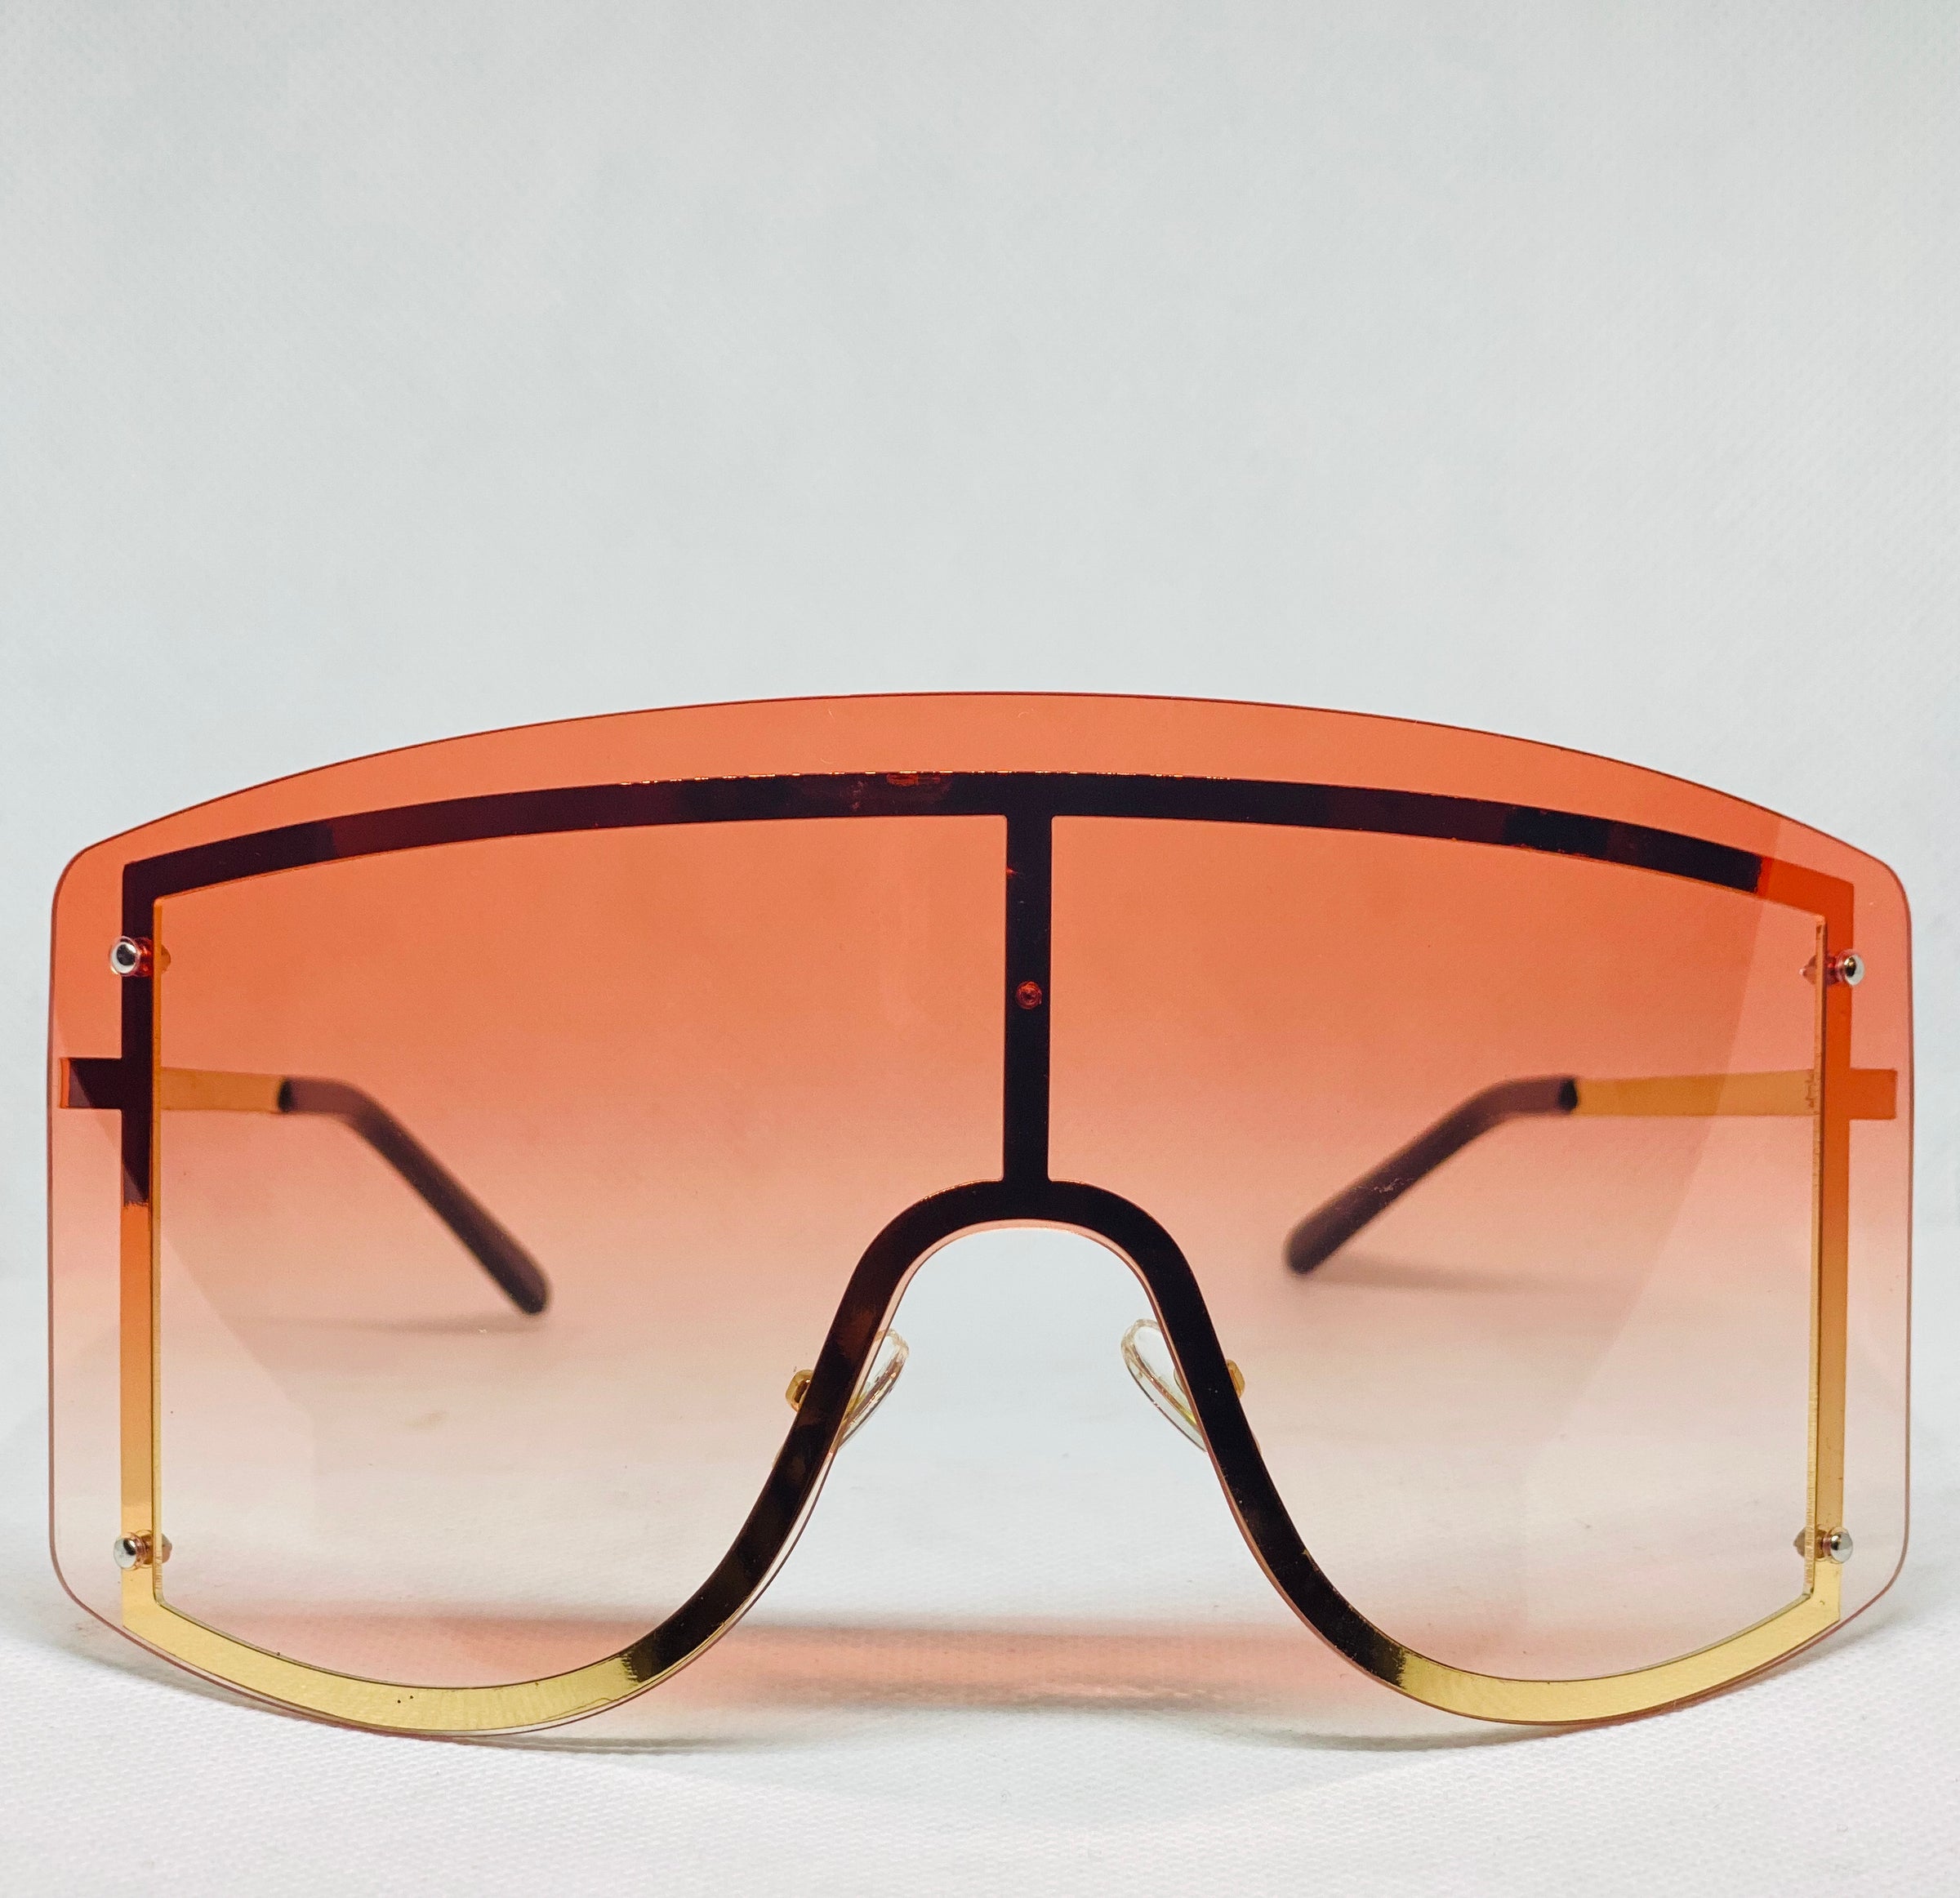 Buy Aaliyah Sunglasses - Branded Sunglasses for Women Online